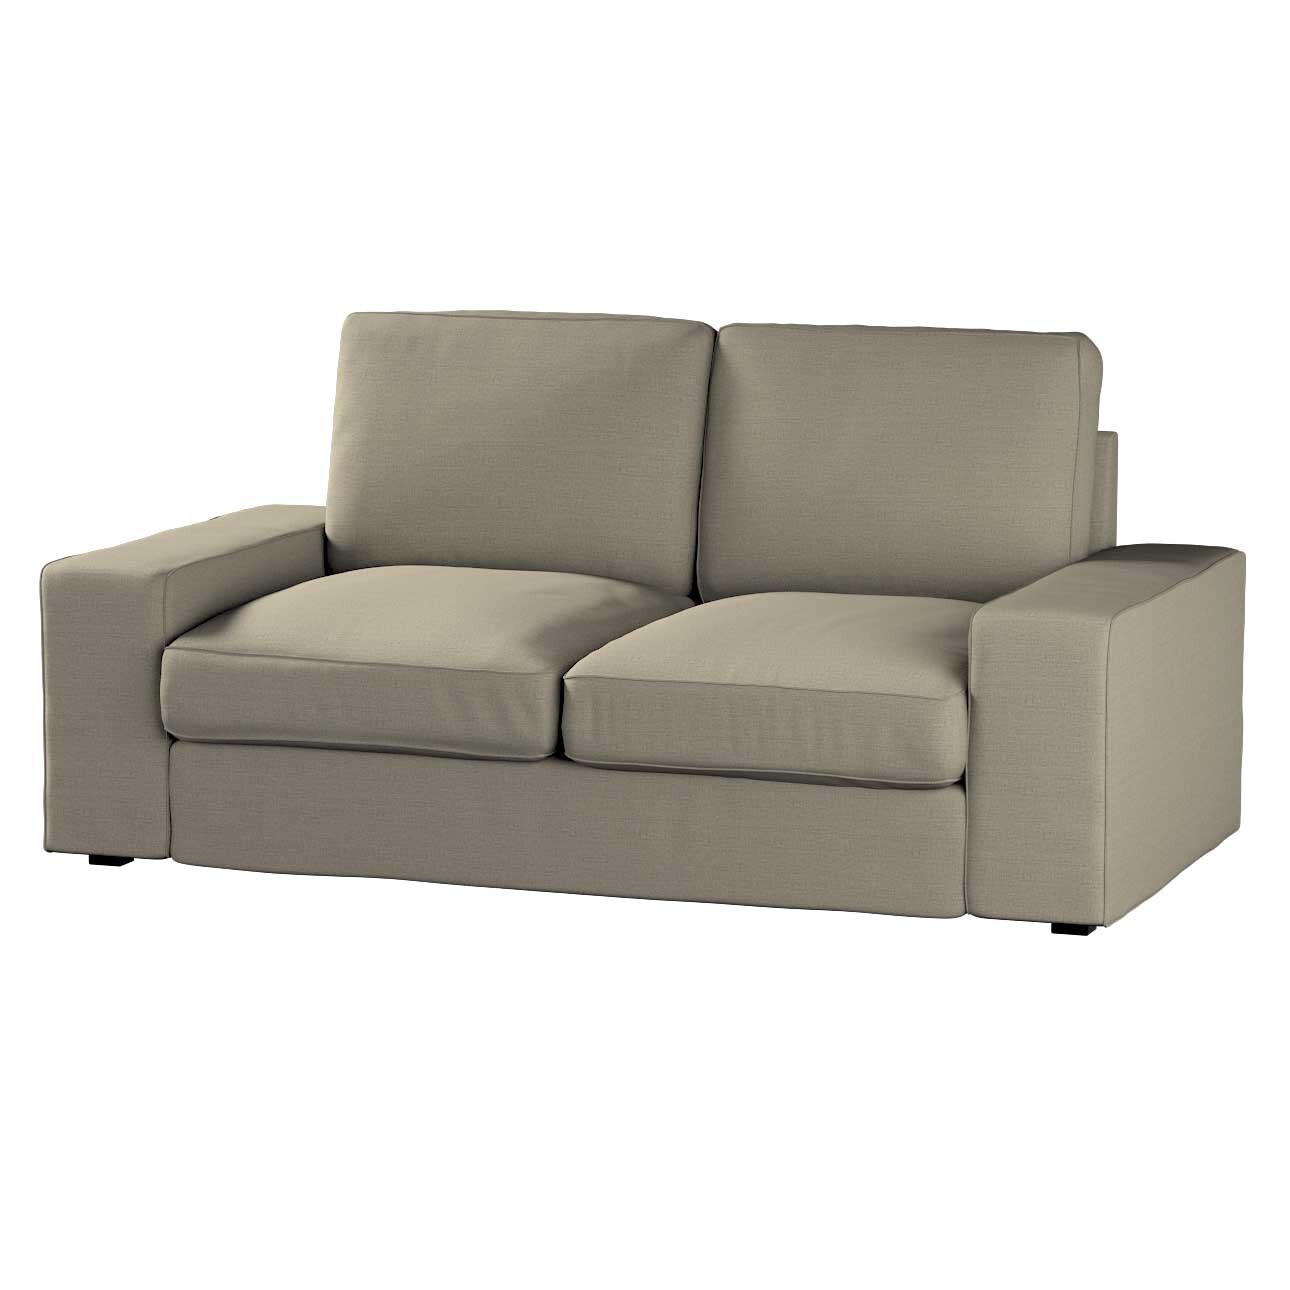 Bezug für Kivik 2-Sitzer Sofa, beige-grau, Bezug für Sofa Kivik 2-Sitzer, L günstig online kaufen